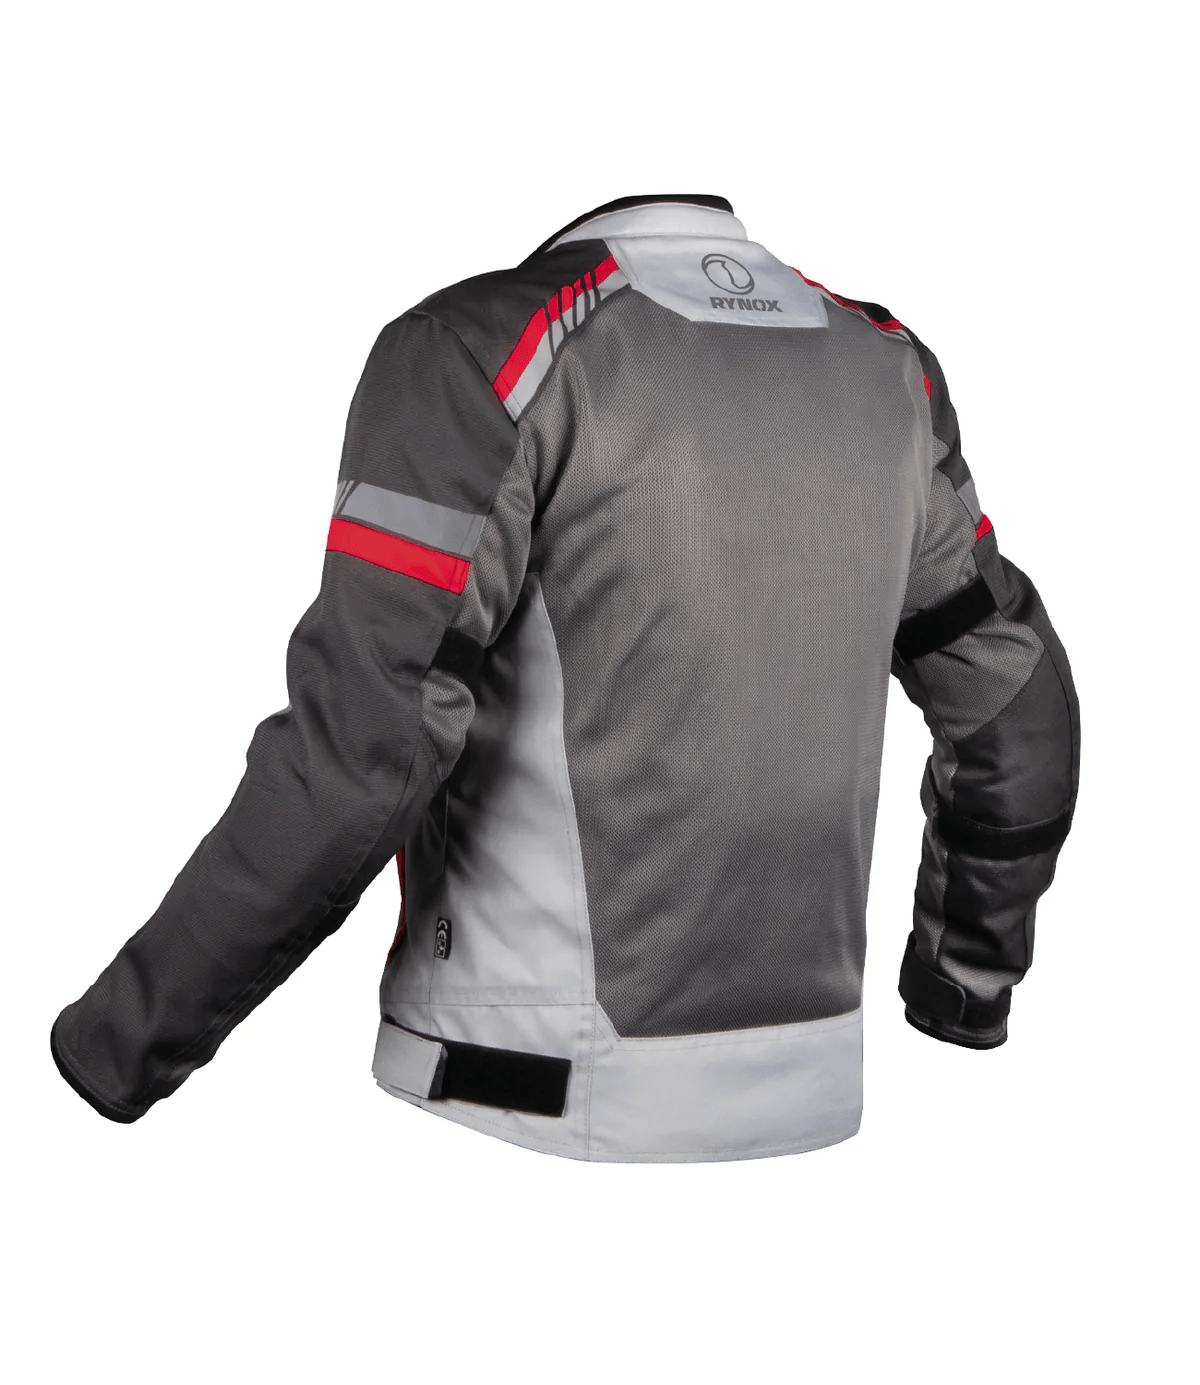 Best Riding Gears |Rynox Stealth EVO Jacket & Advento Pants & Inferno Pro  Gloves - YouTube